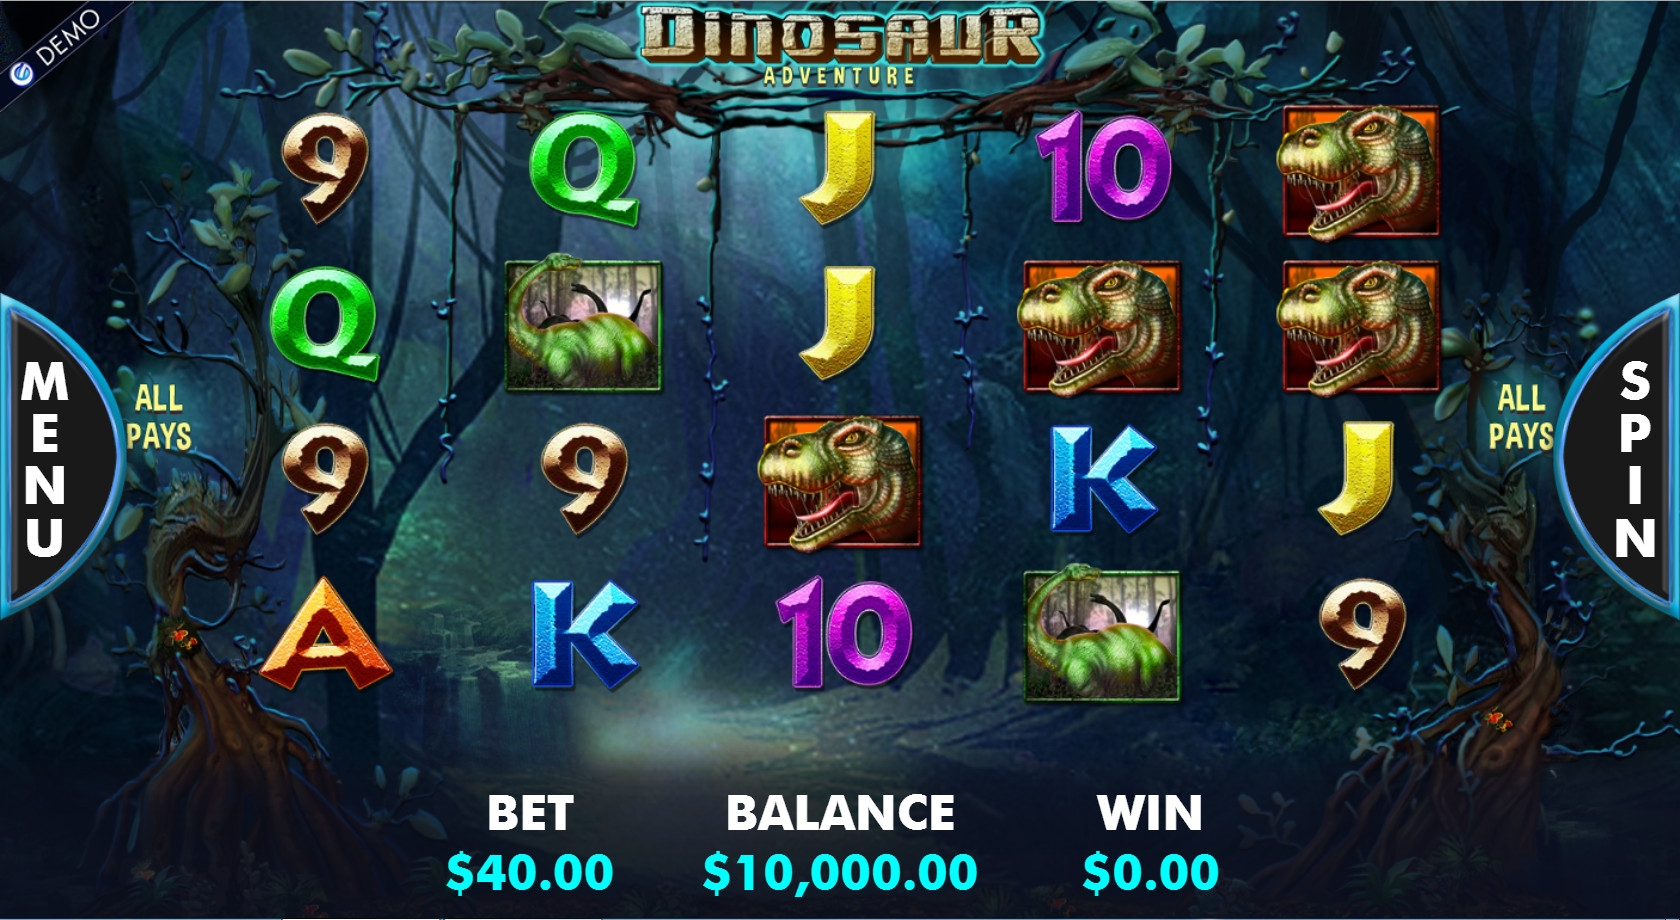 Dinosaur Adventure (Dinosaur Adventure) from category Slots